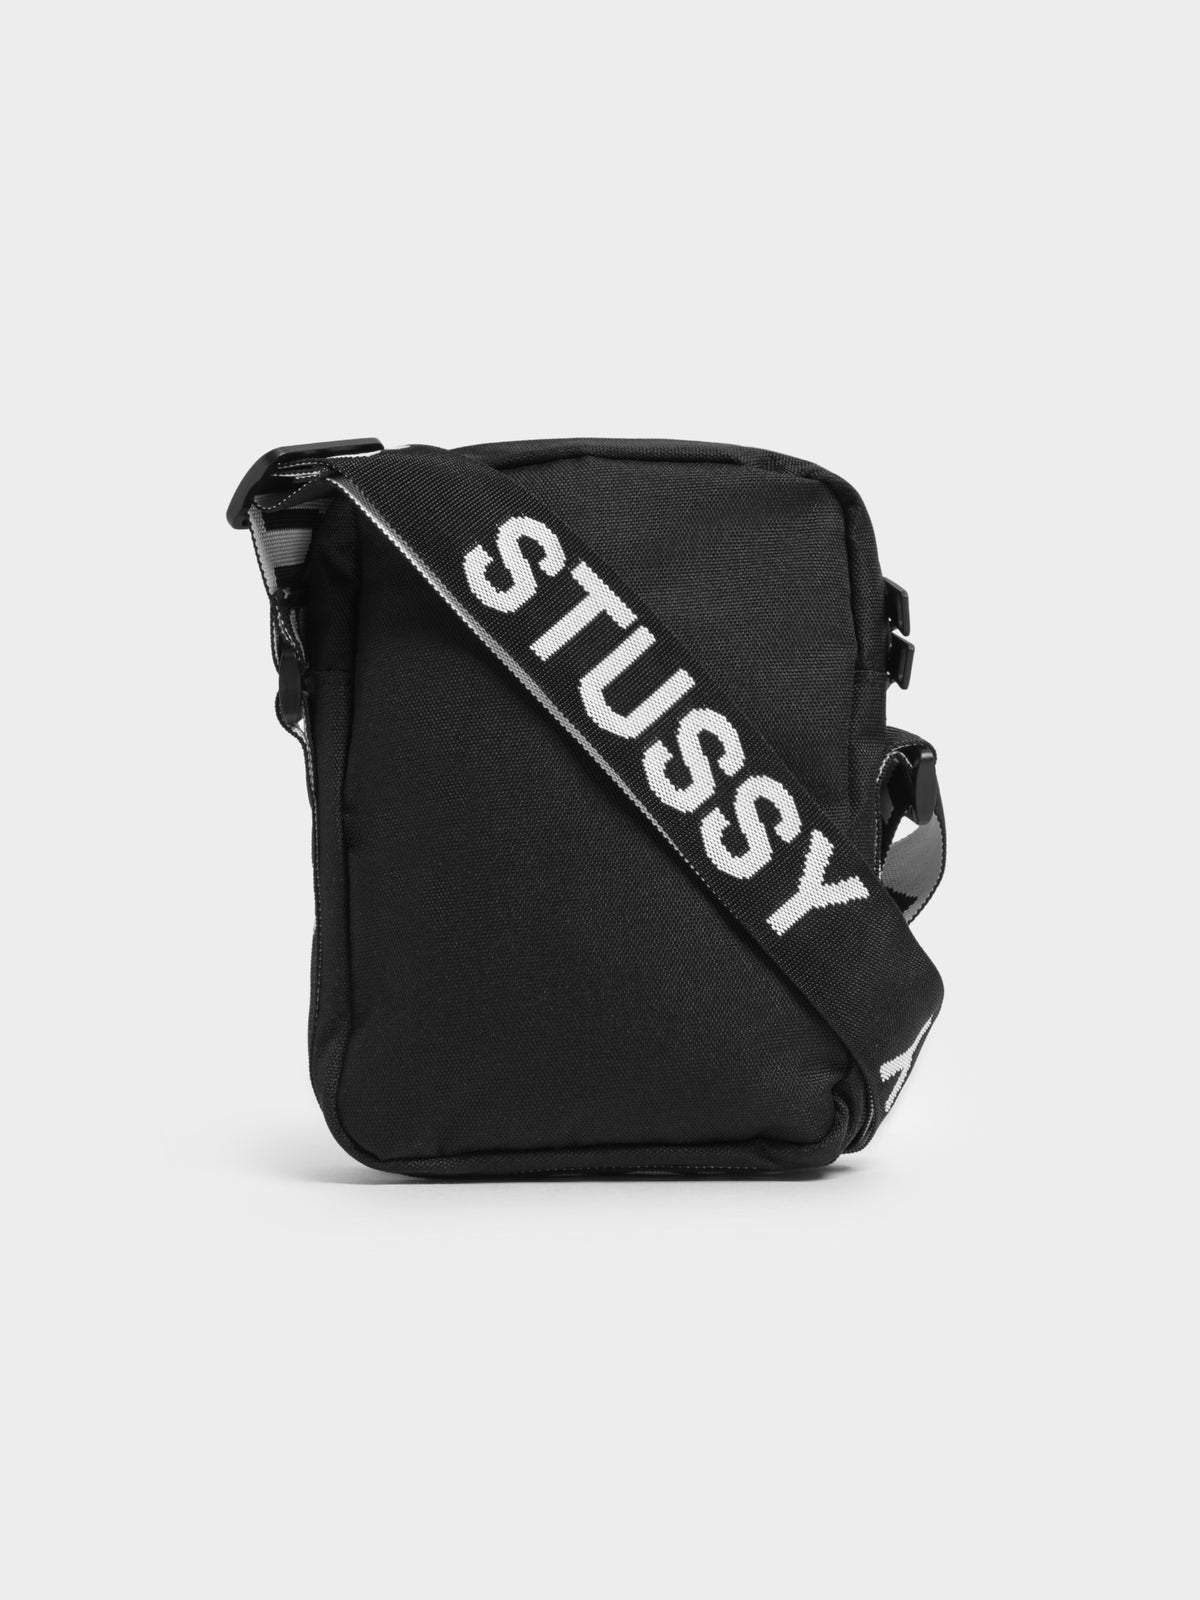 Stussy Logo Messenger Bag in Black - Glue Store